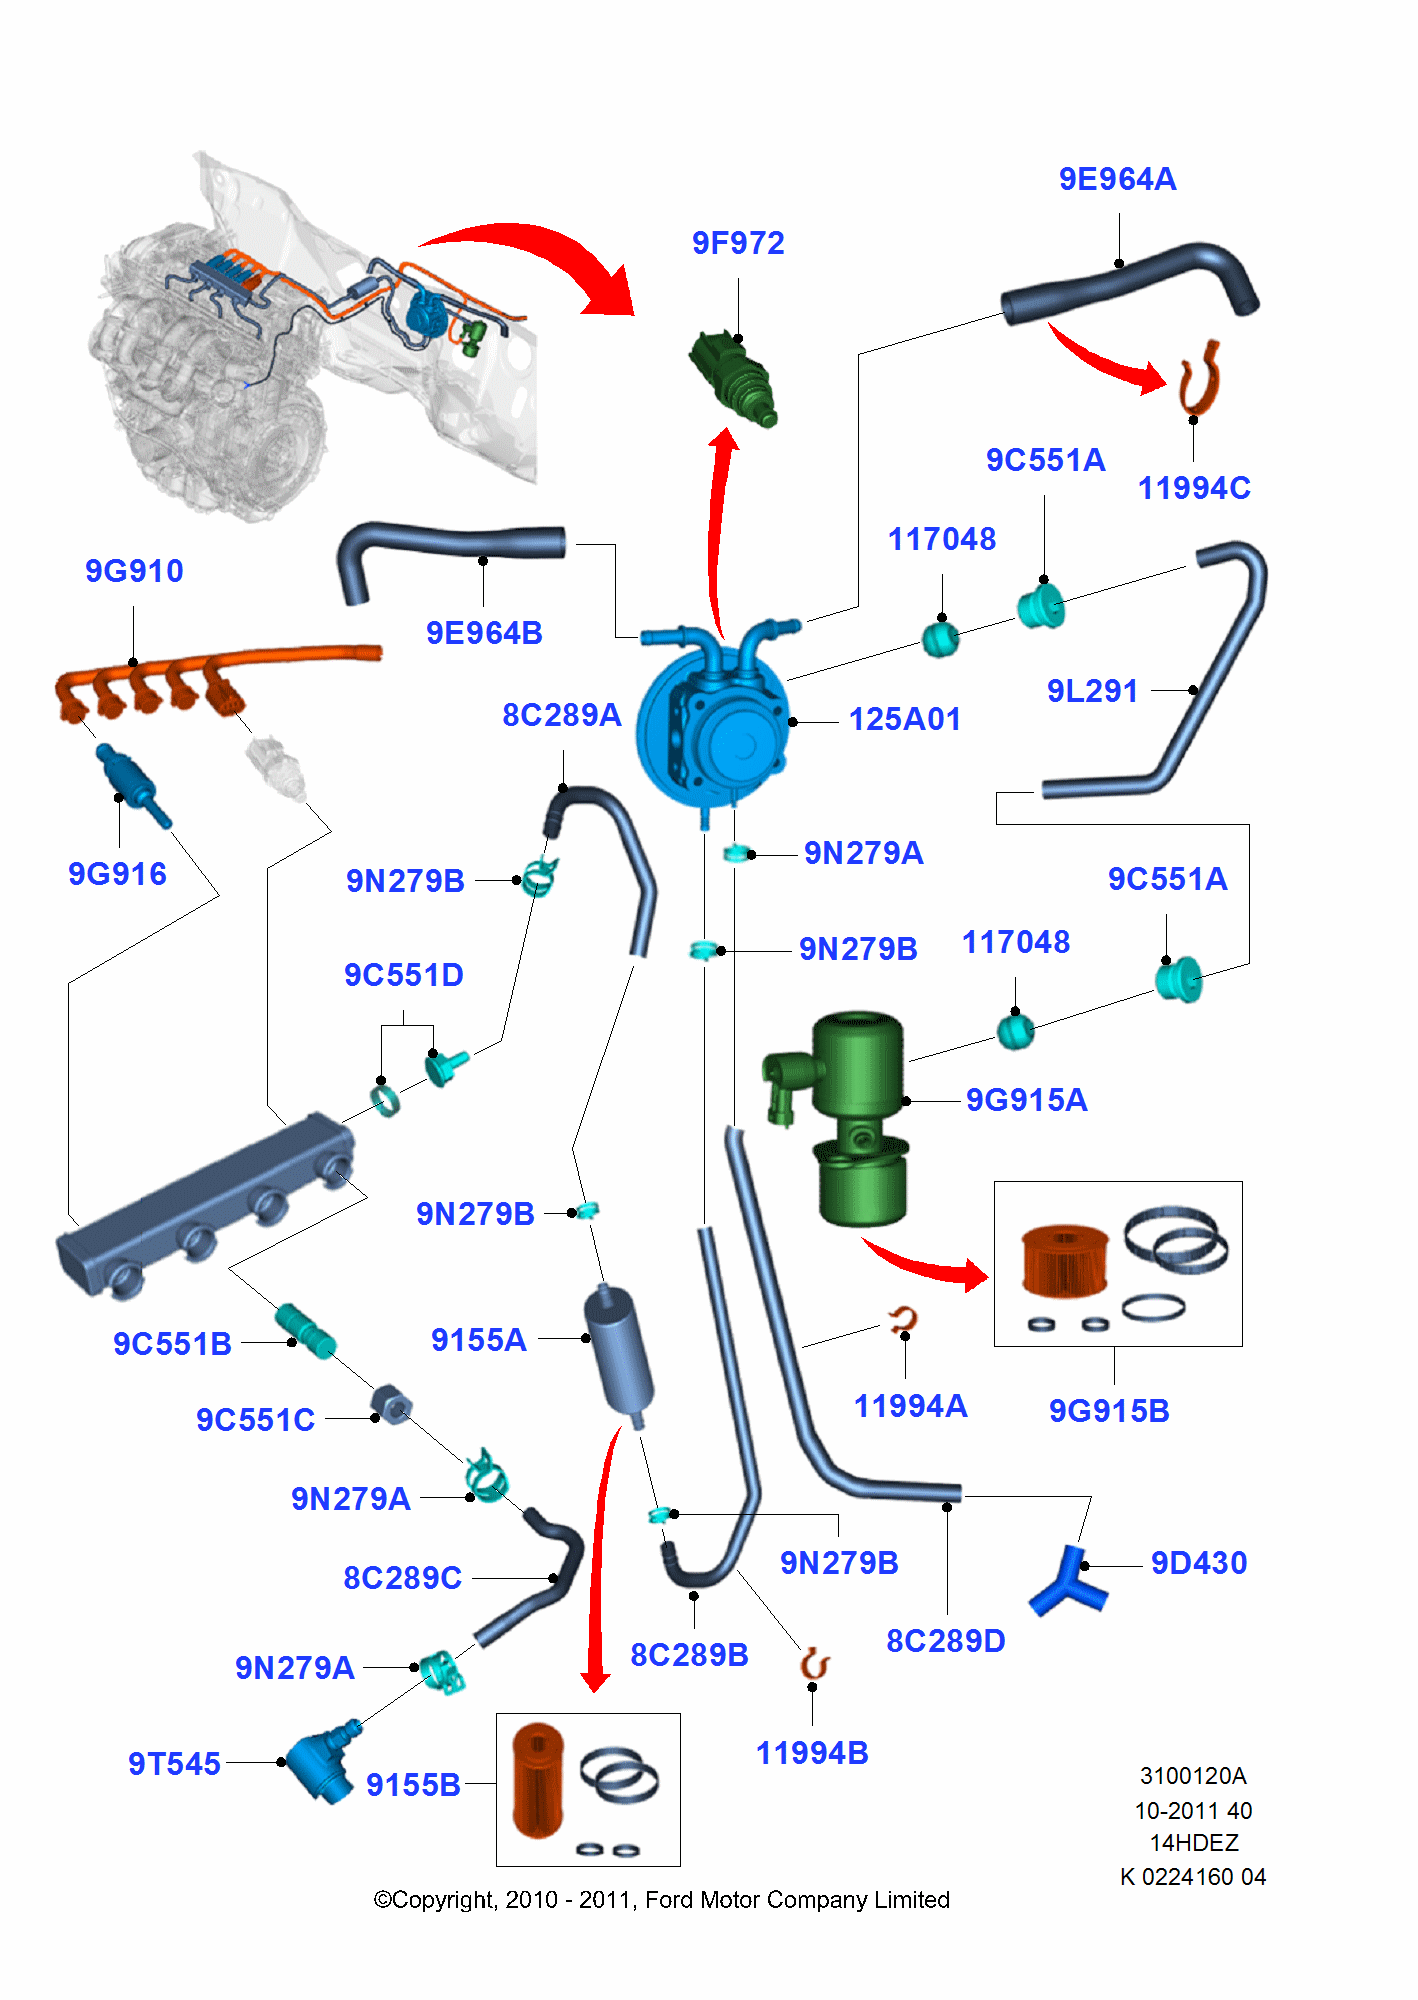 Alternative Fuel System dėl Ford Fiesta Fiesta 2008-2012        (CB1)